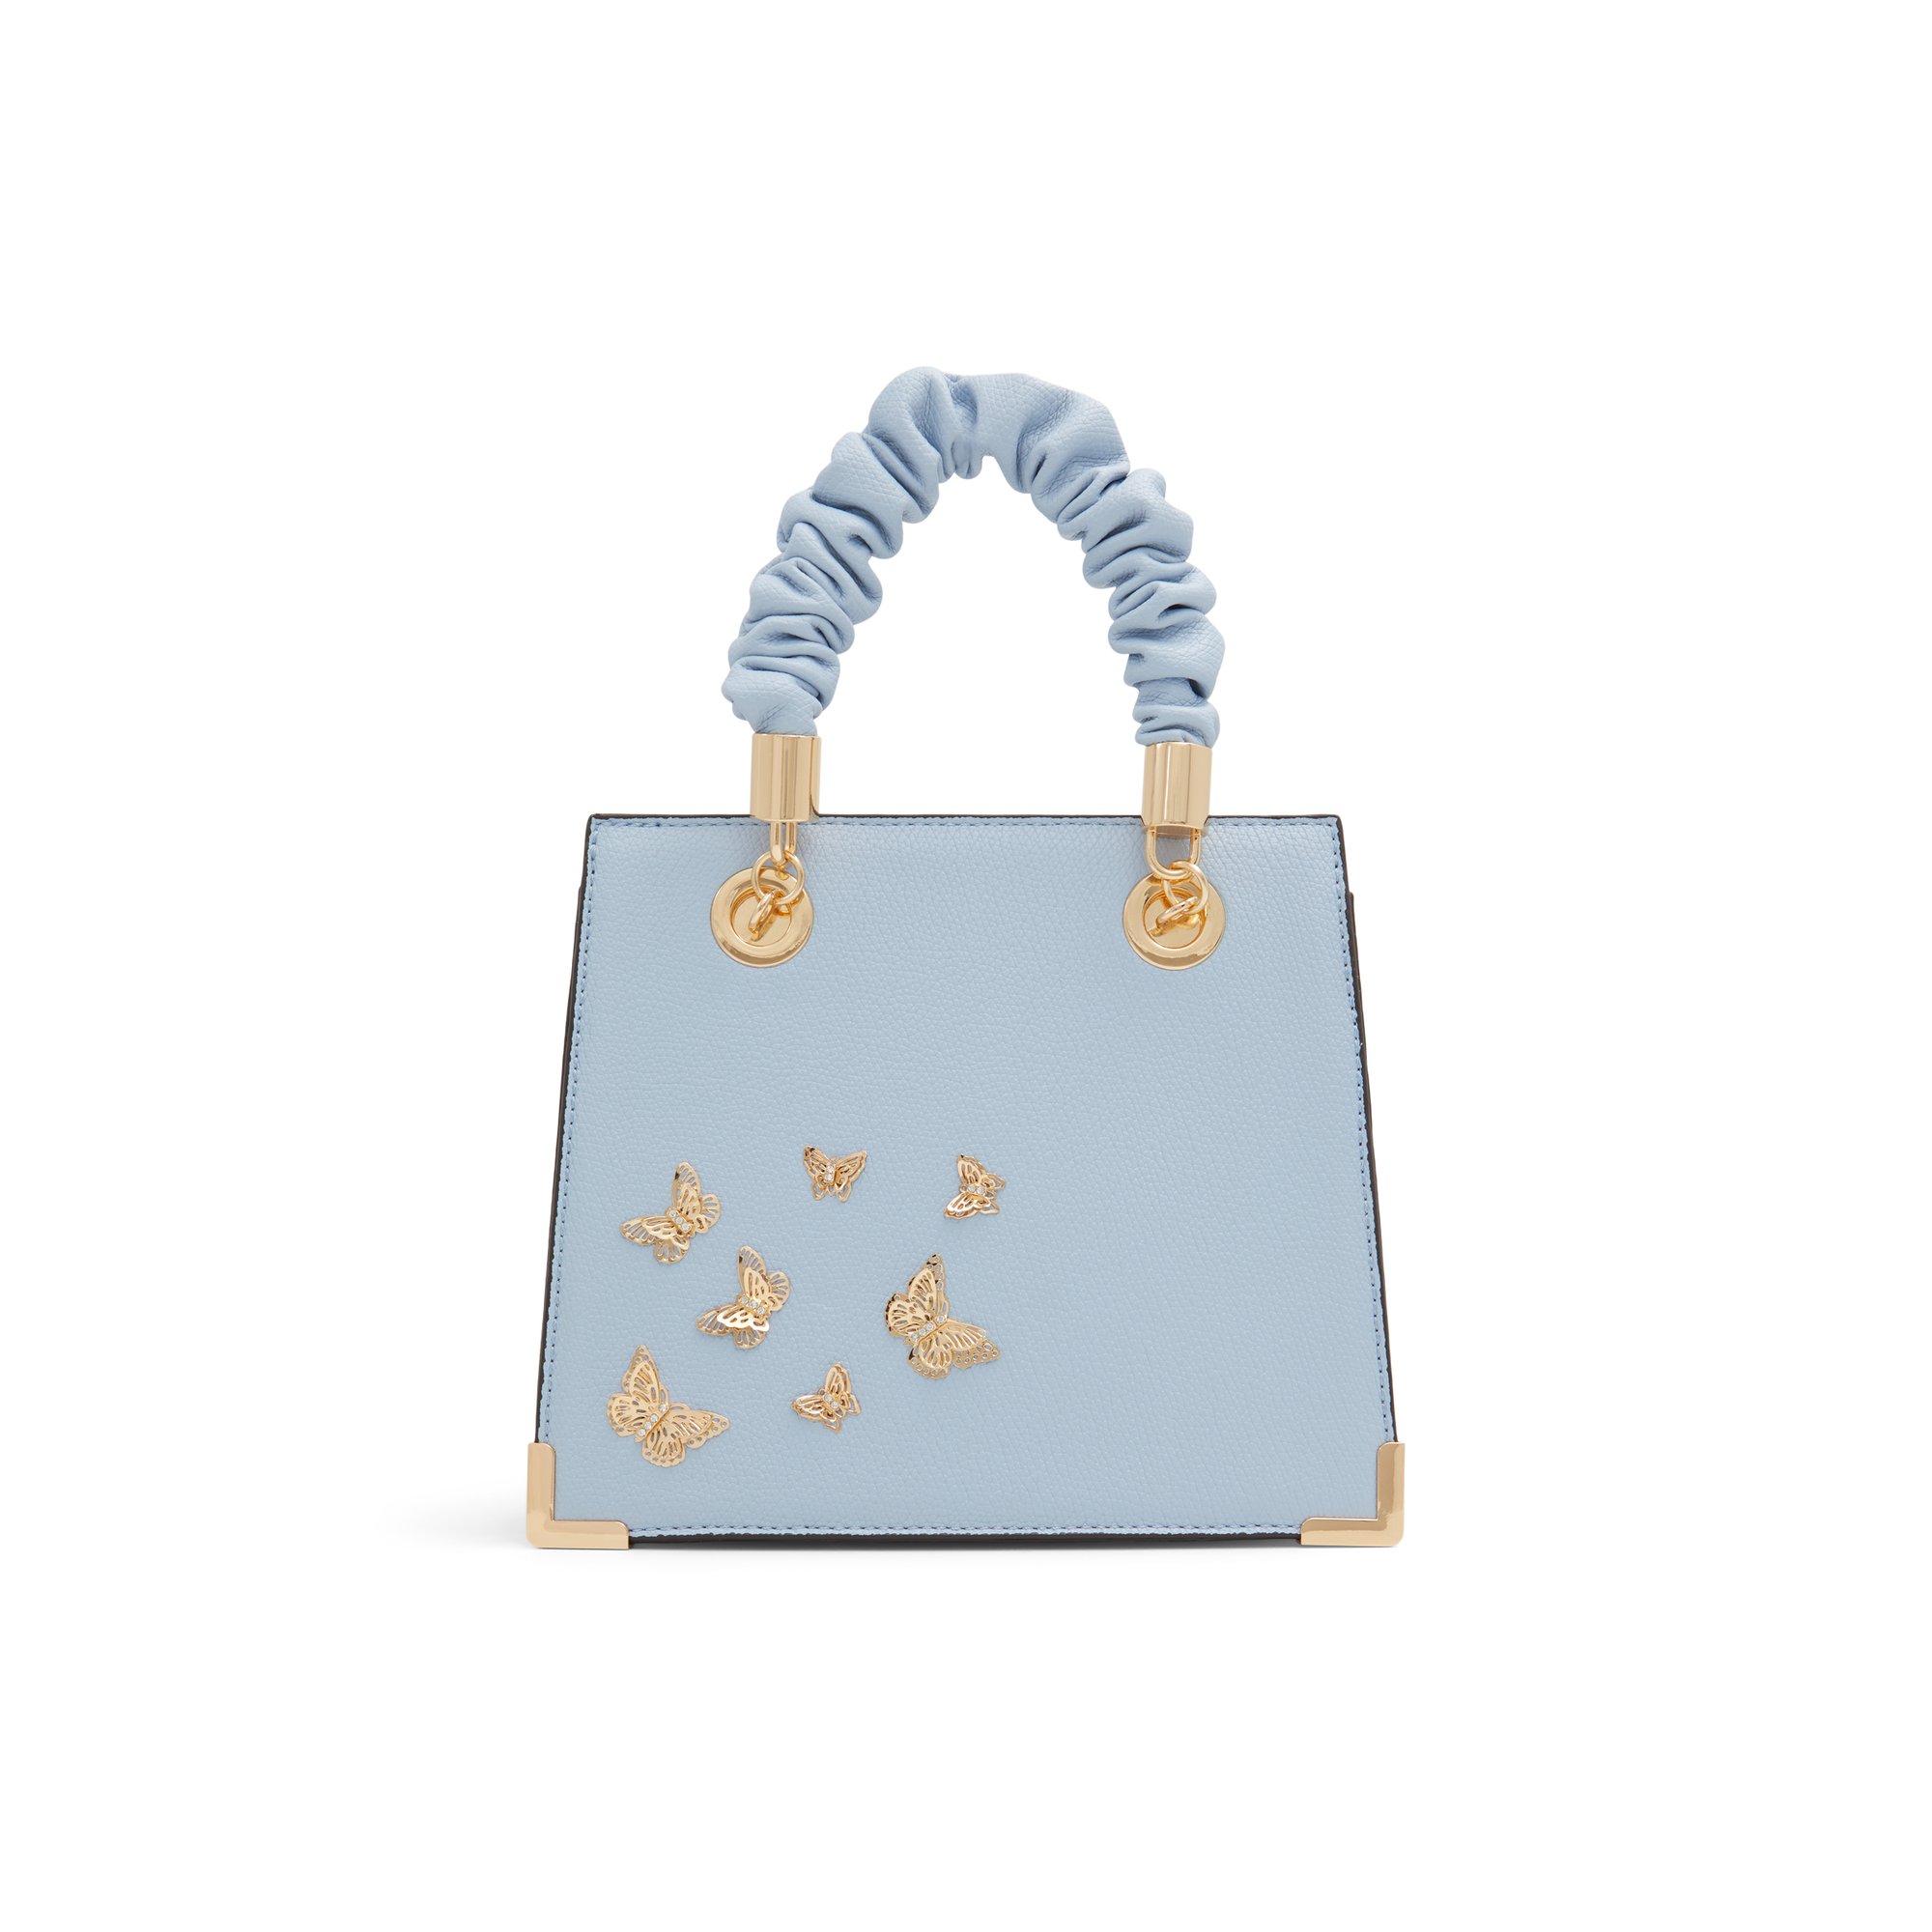 ALDO Gecelaax - Women's Handbags Totes - Blue